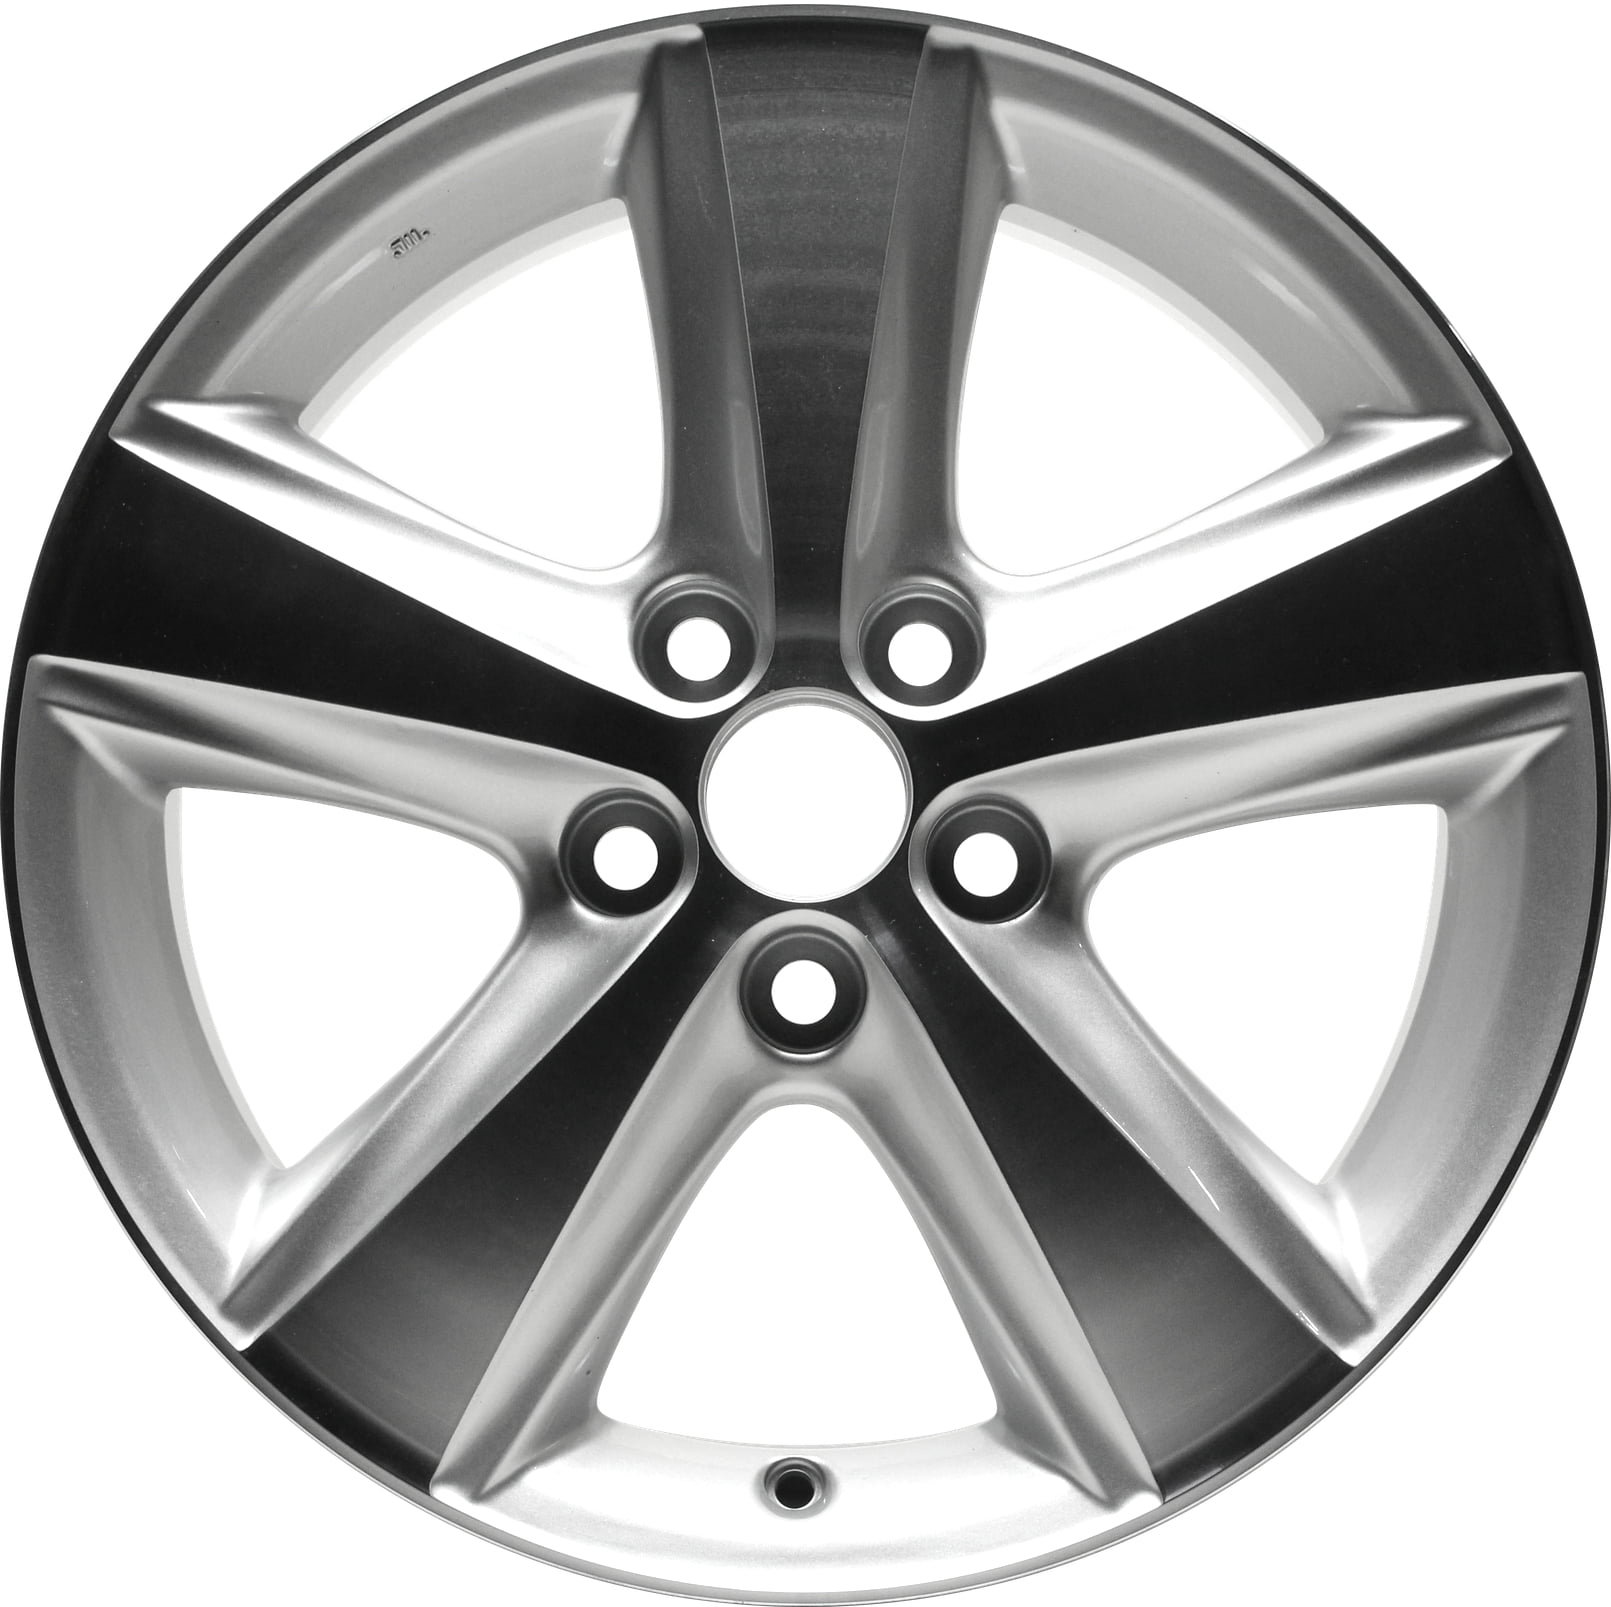 New 17x7.0 Inch Aluminum Wheel Rim Fits 2012-2014 Toyota Camry 5-114.3mm